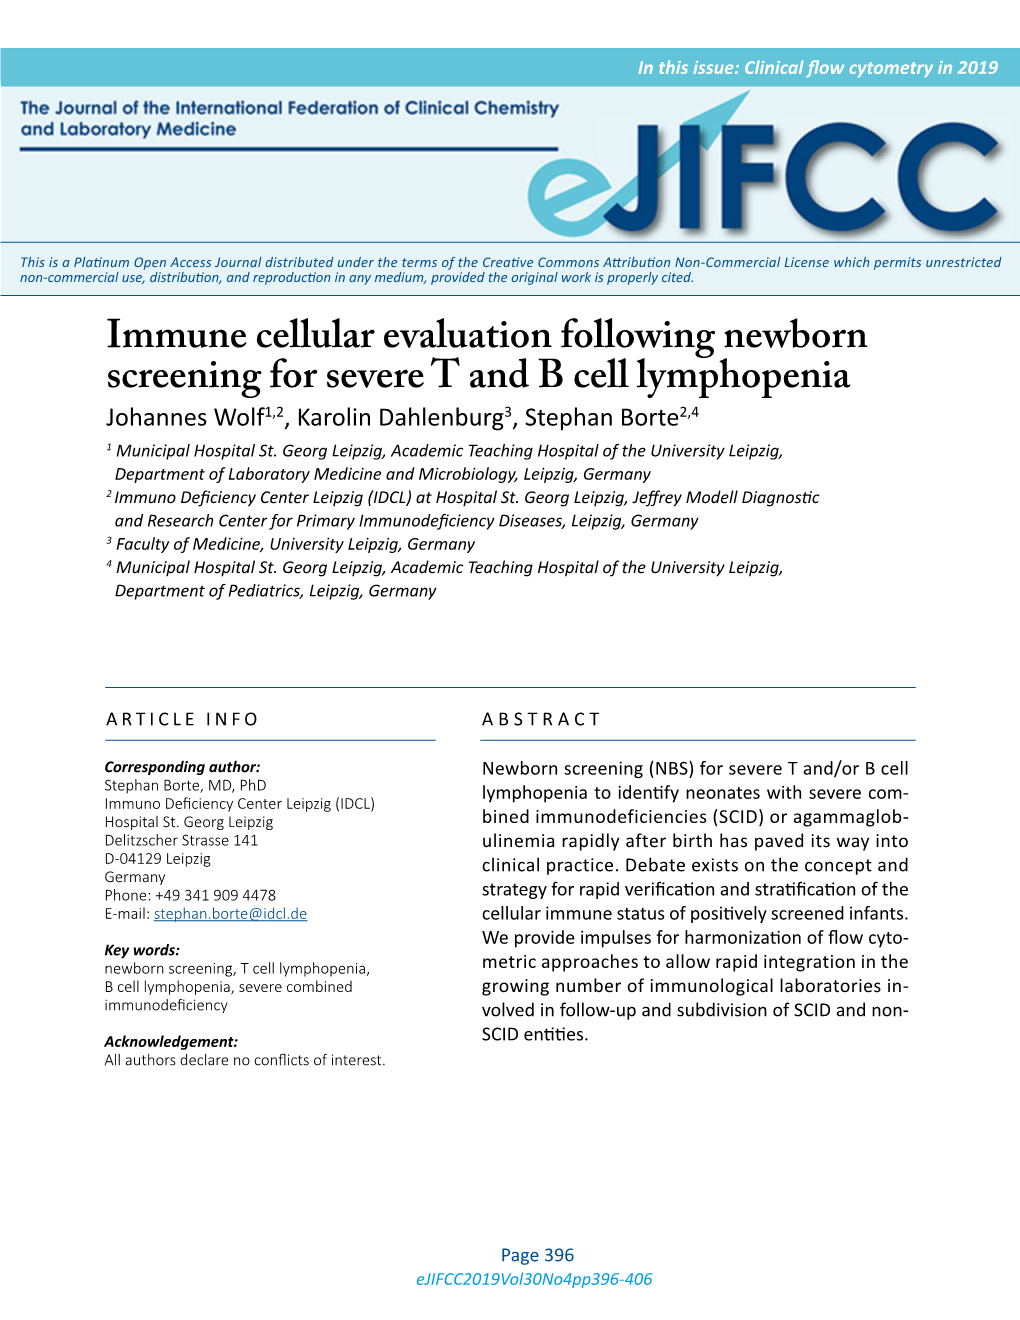 Immune Cellular Evaluation Following Newborn Screening for Severe T